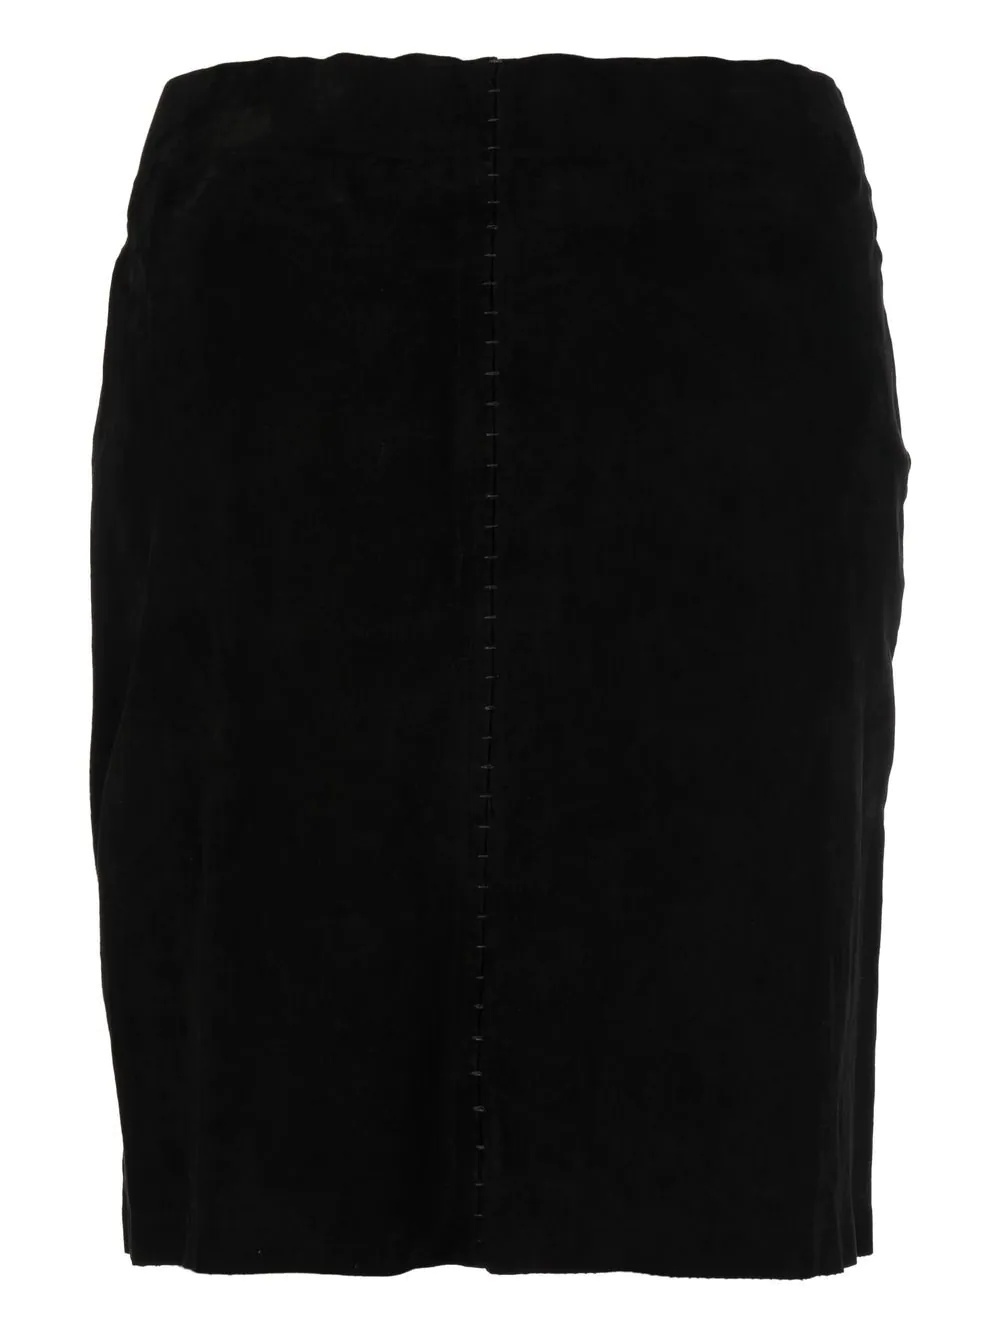 stitch-detail leather skirt - 2